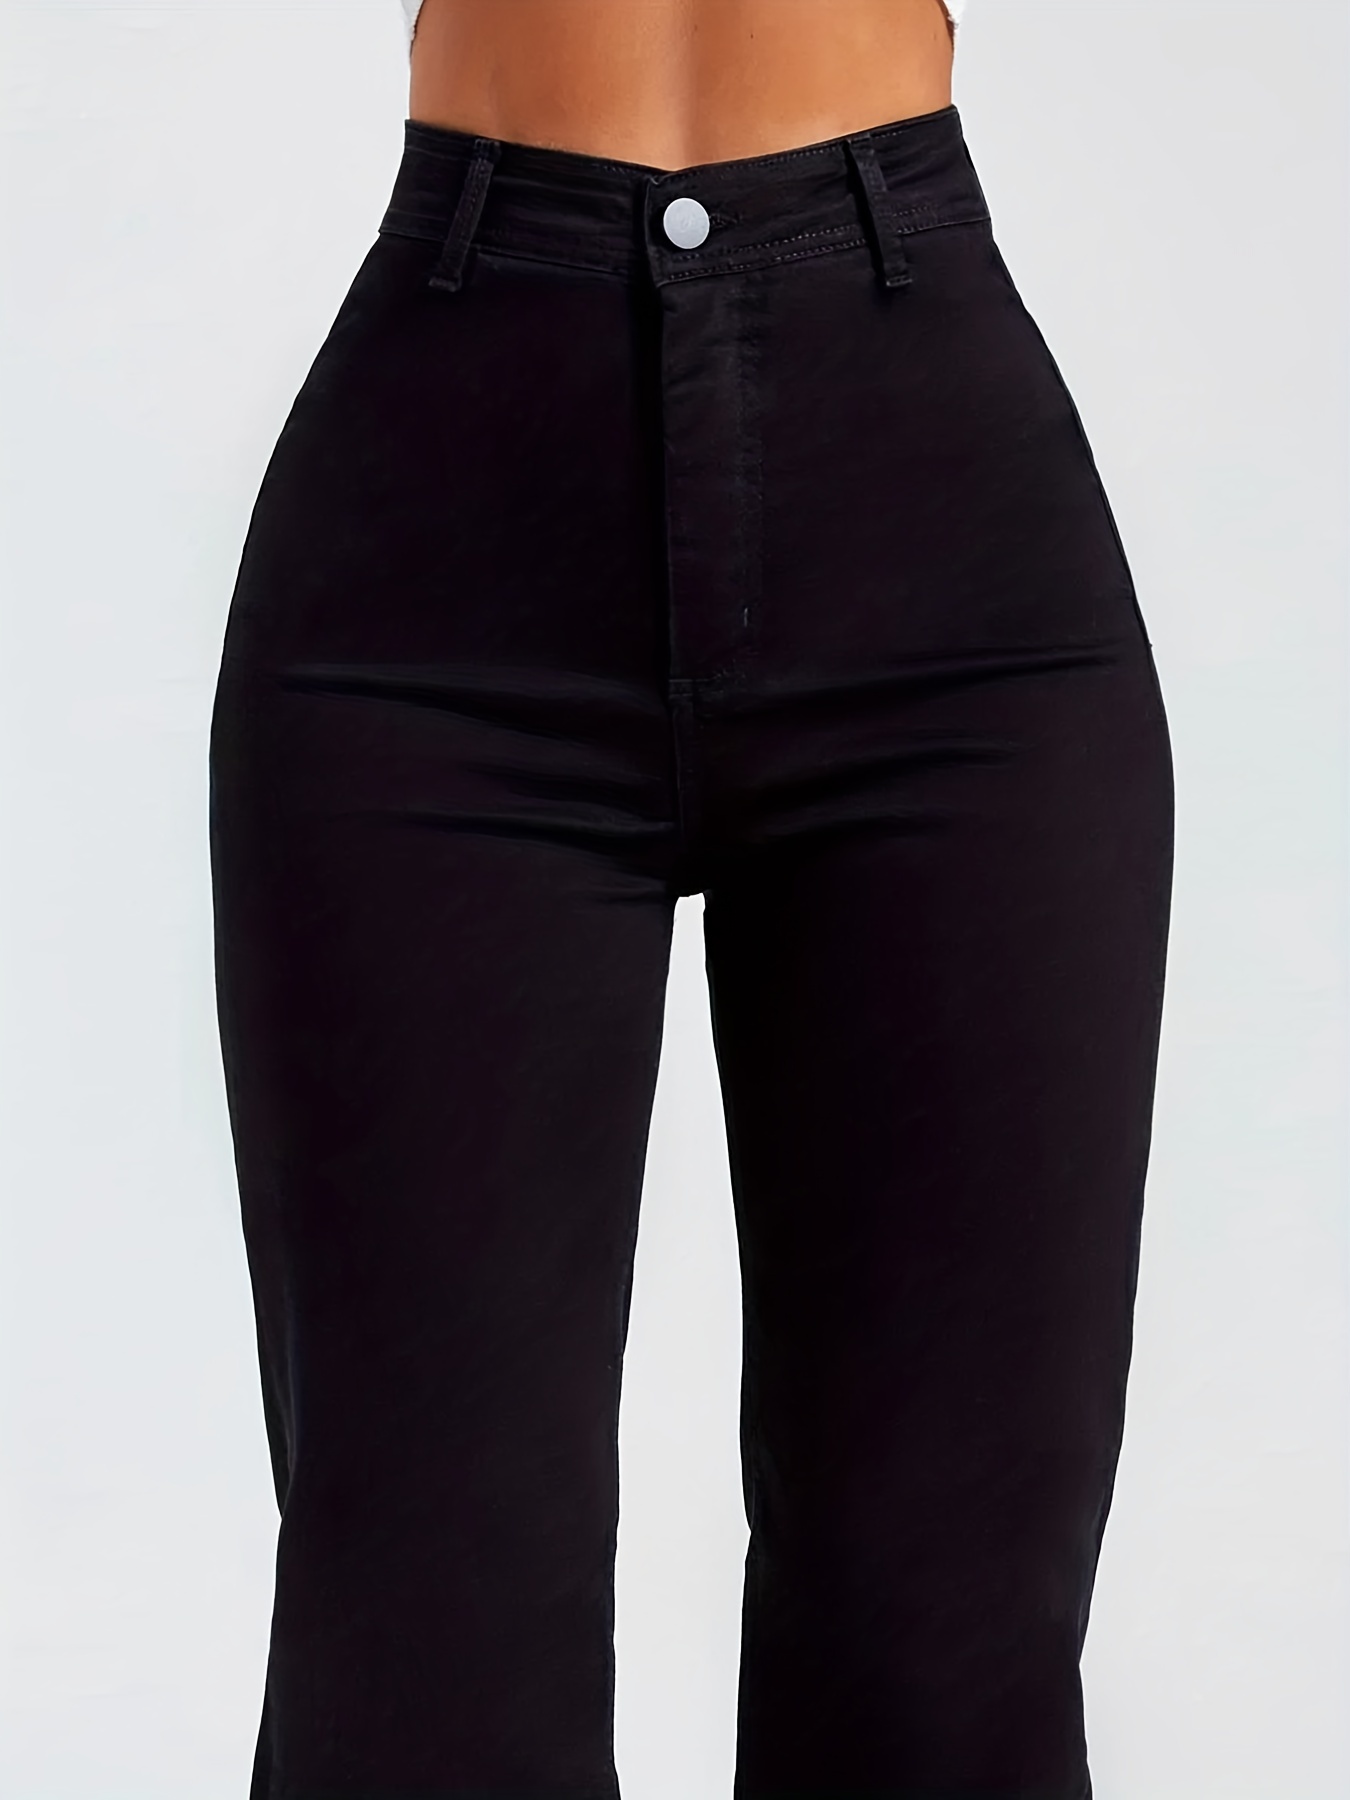 Black High * Flare Leg Jeans, Zipper Button Closure Solid Color Stretchy  Bell Bottoms Denim Pants, Women's Denim Jeans & Clothing